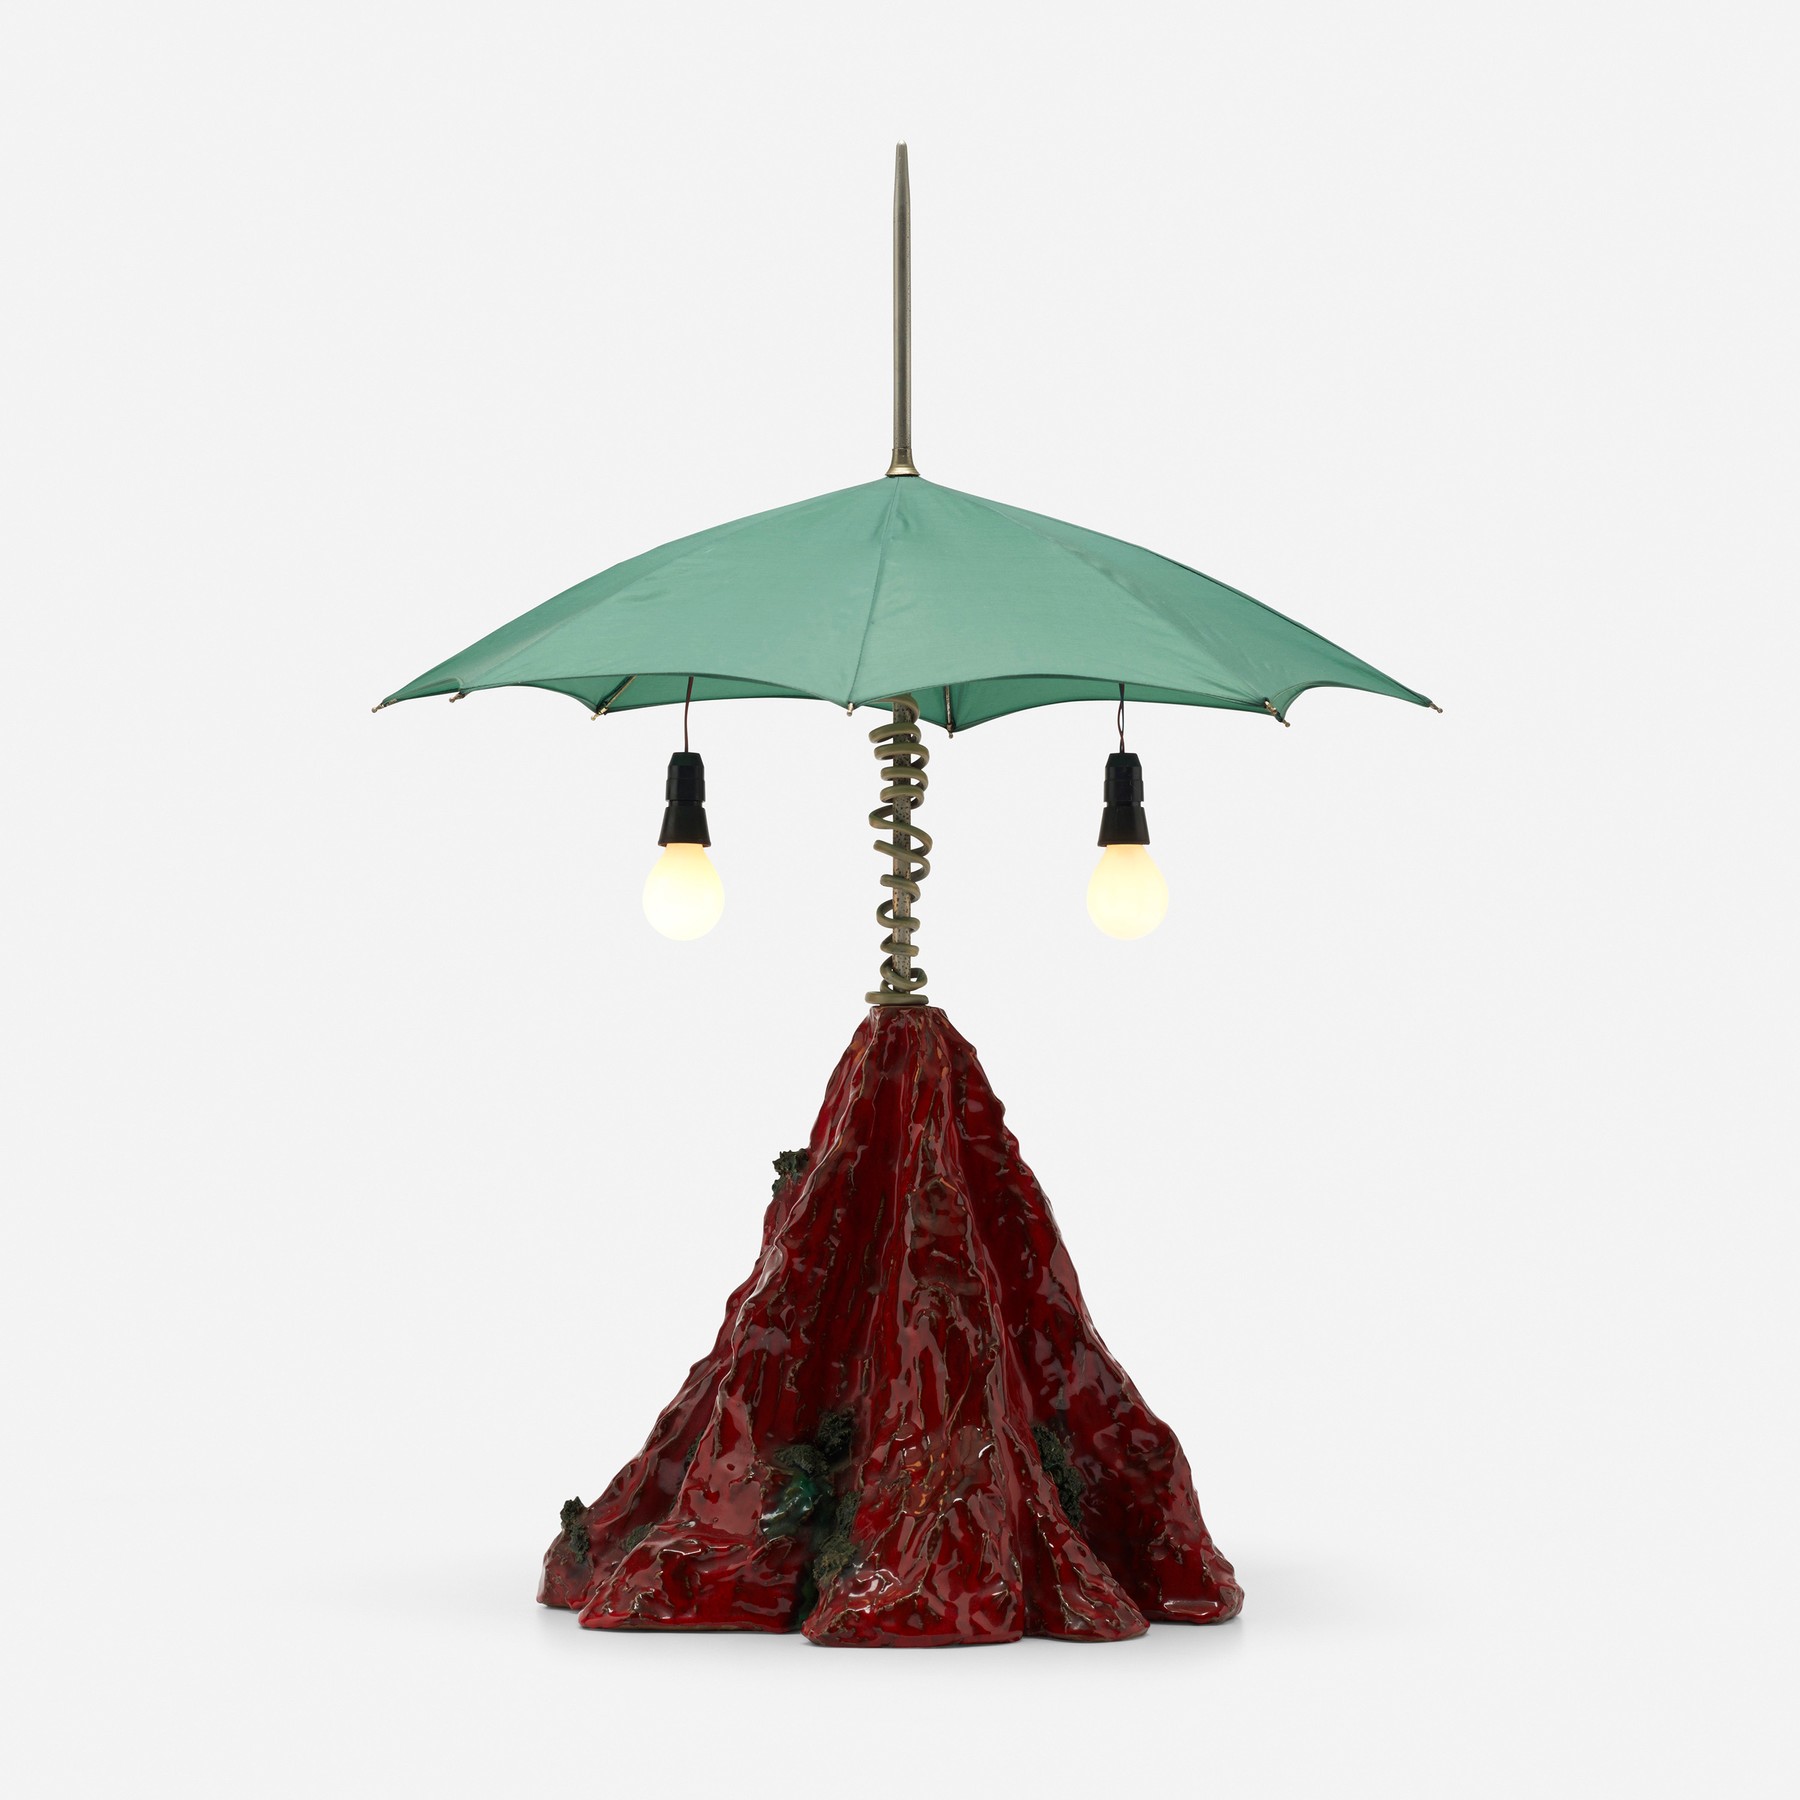 183_1_design_october_2014_lapo_binazzi_paramount_table_lamp__wright_auction.jpg?t=1475163068